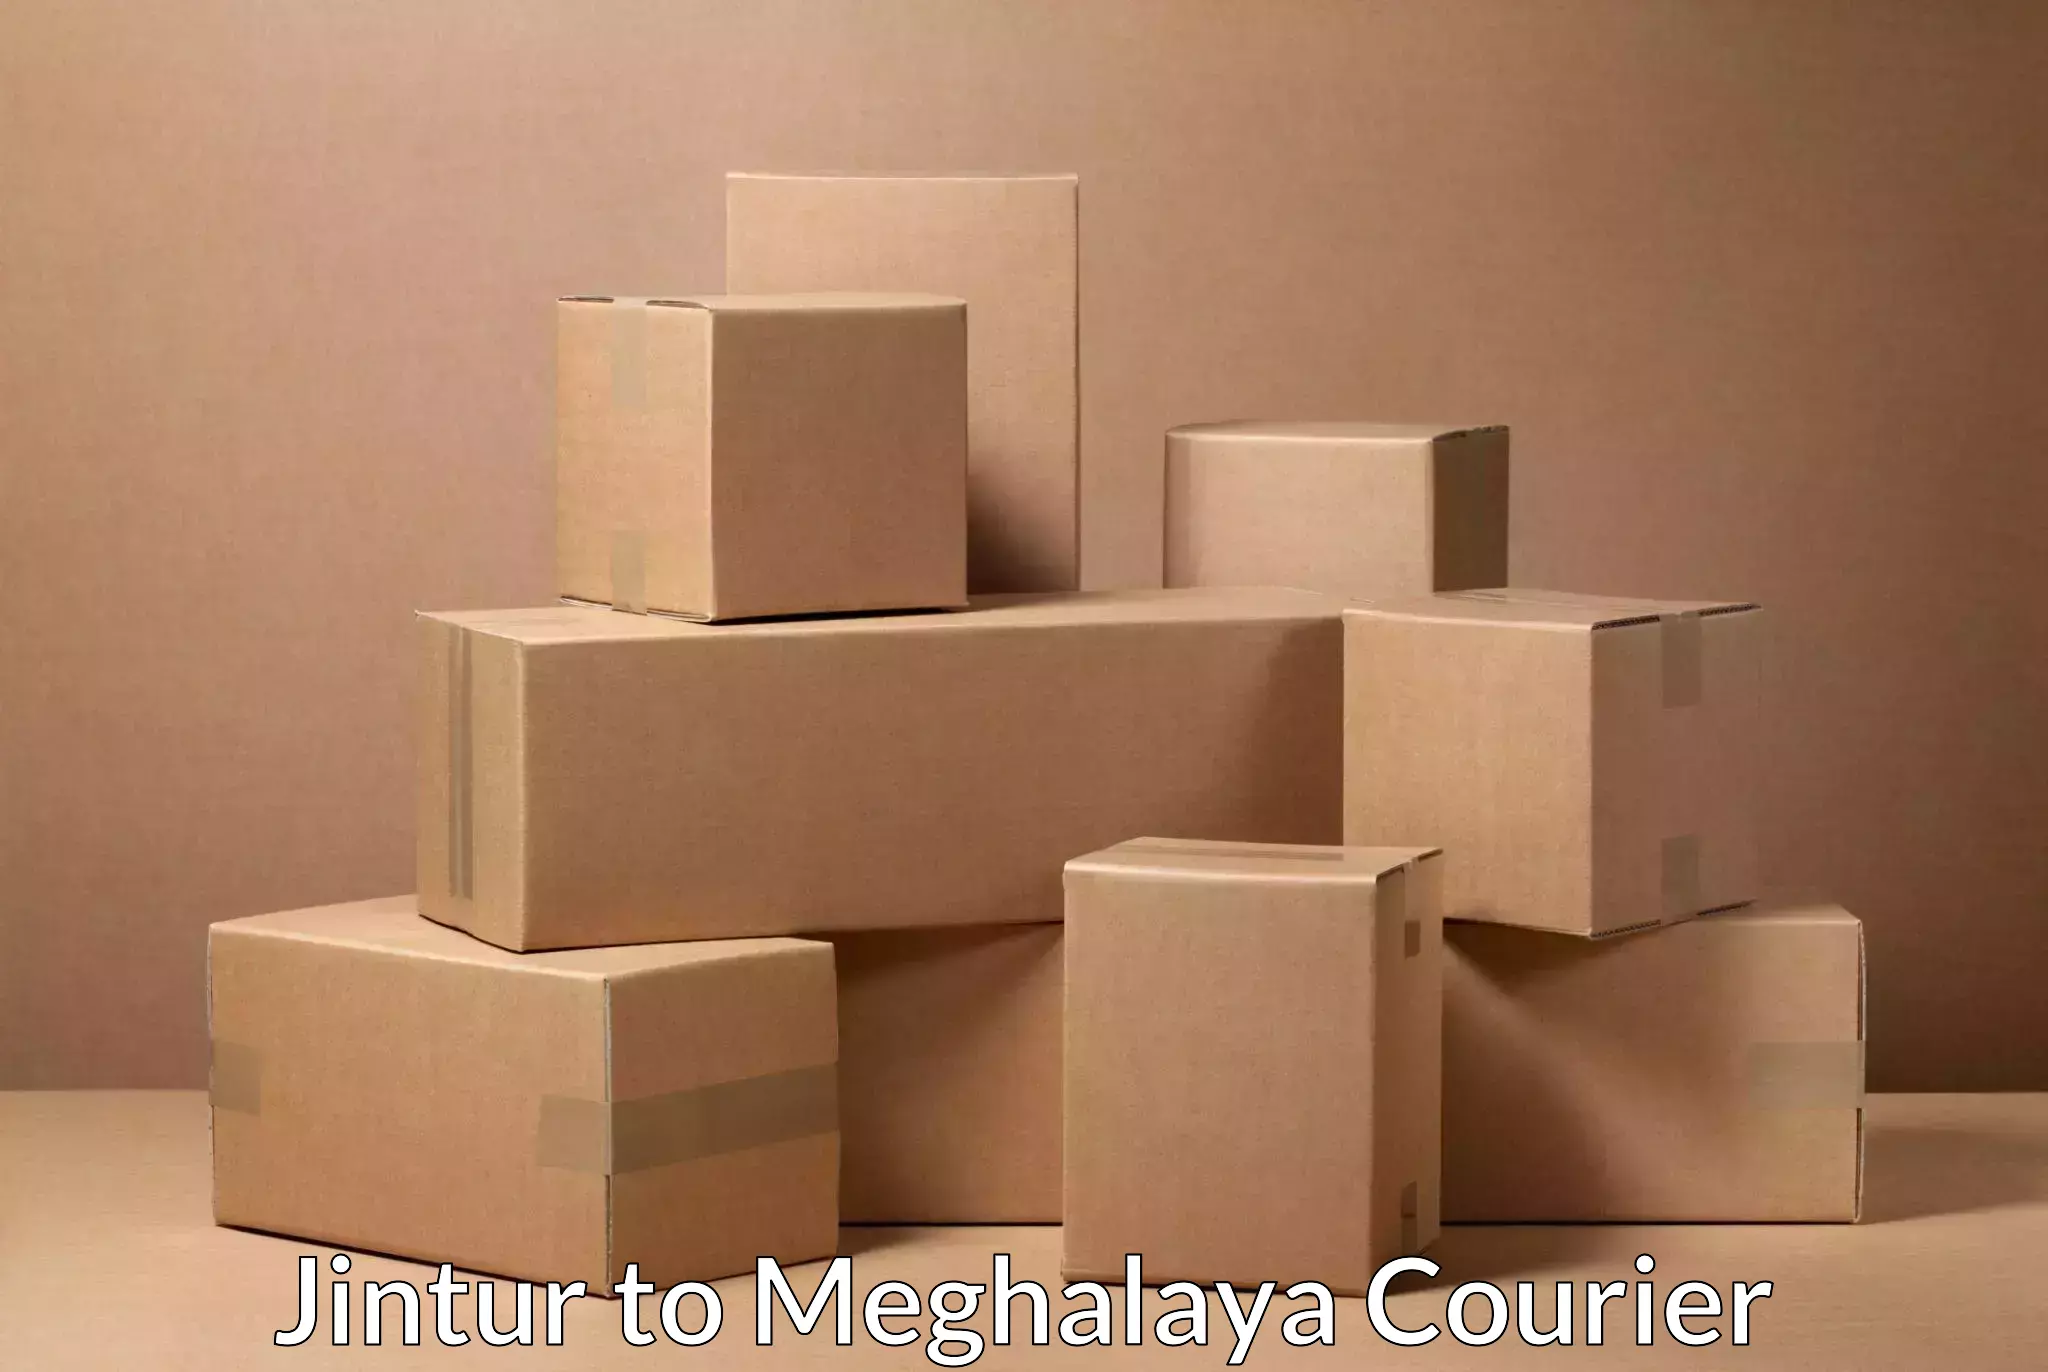 Digital courier platforms Jintur to Meghalaya